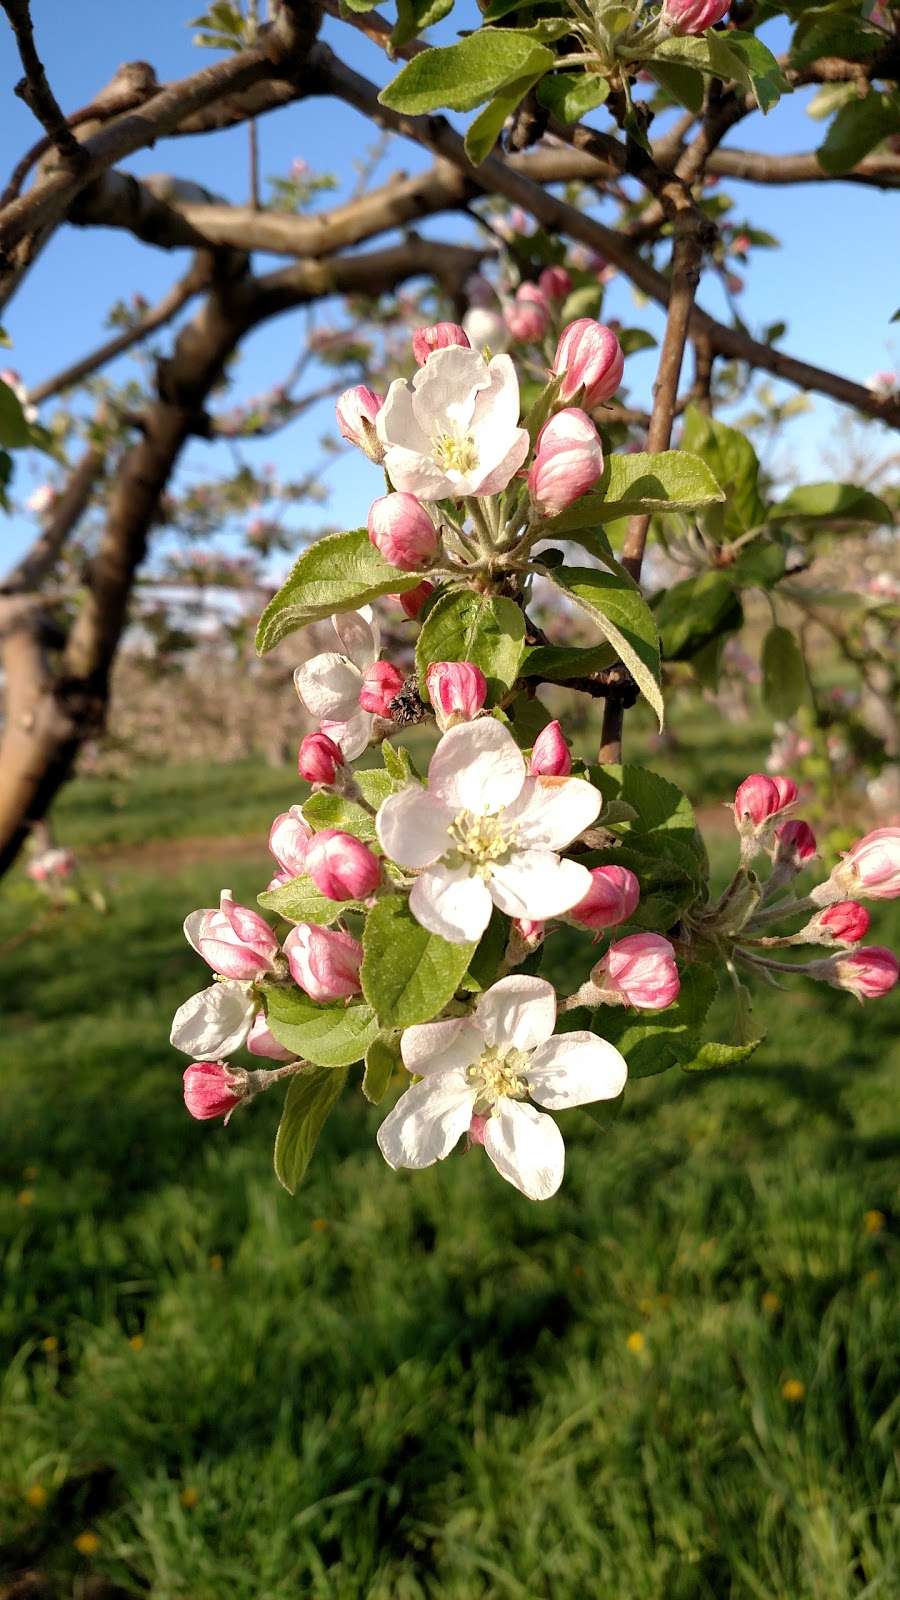 Apple Barn Orchard & Winery | W6384 Sugar Creek Rd, Elkhorn, WI 53121, USA | Phone: (262) 728-3266